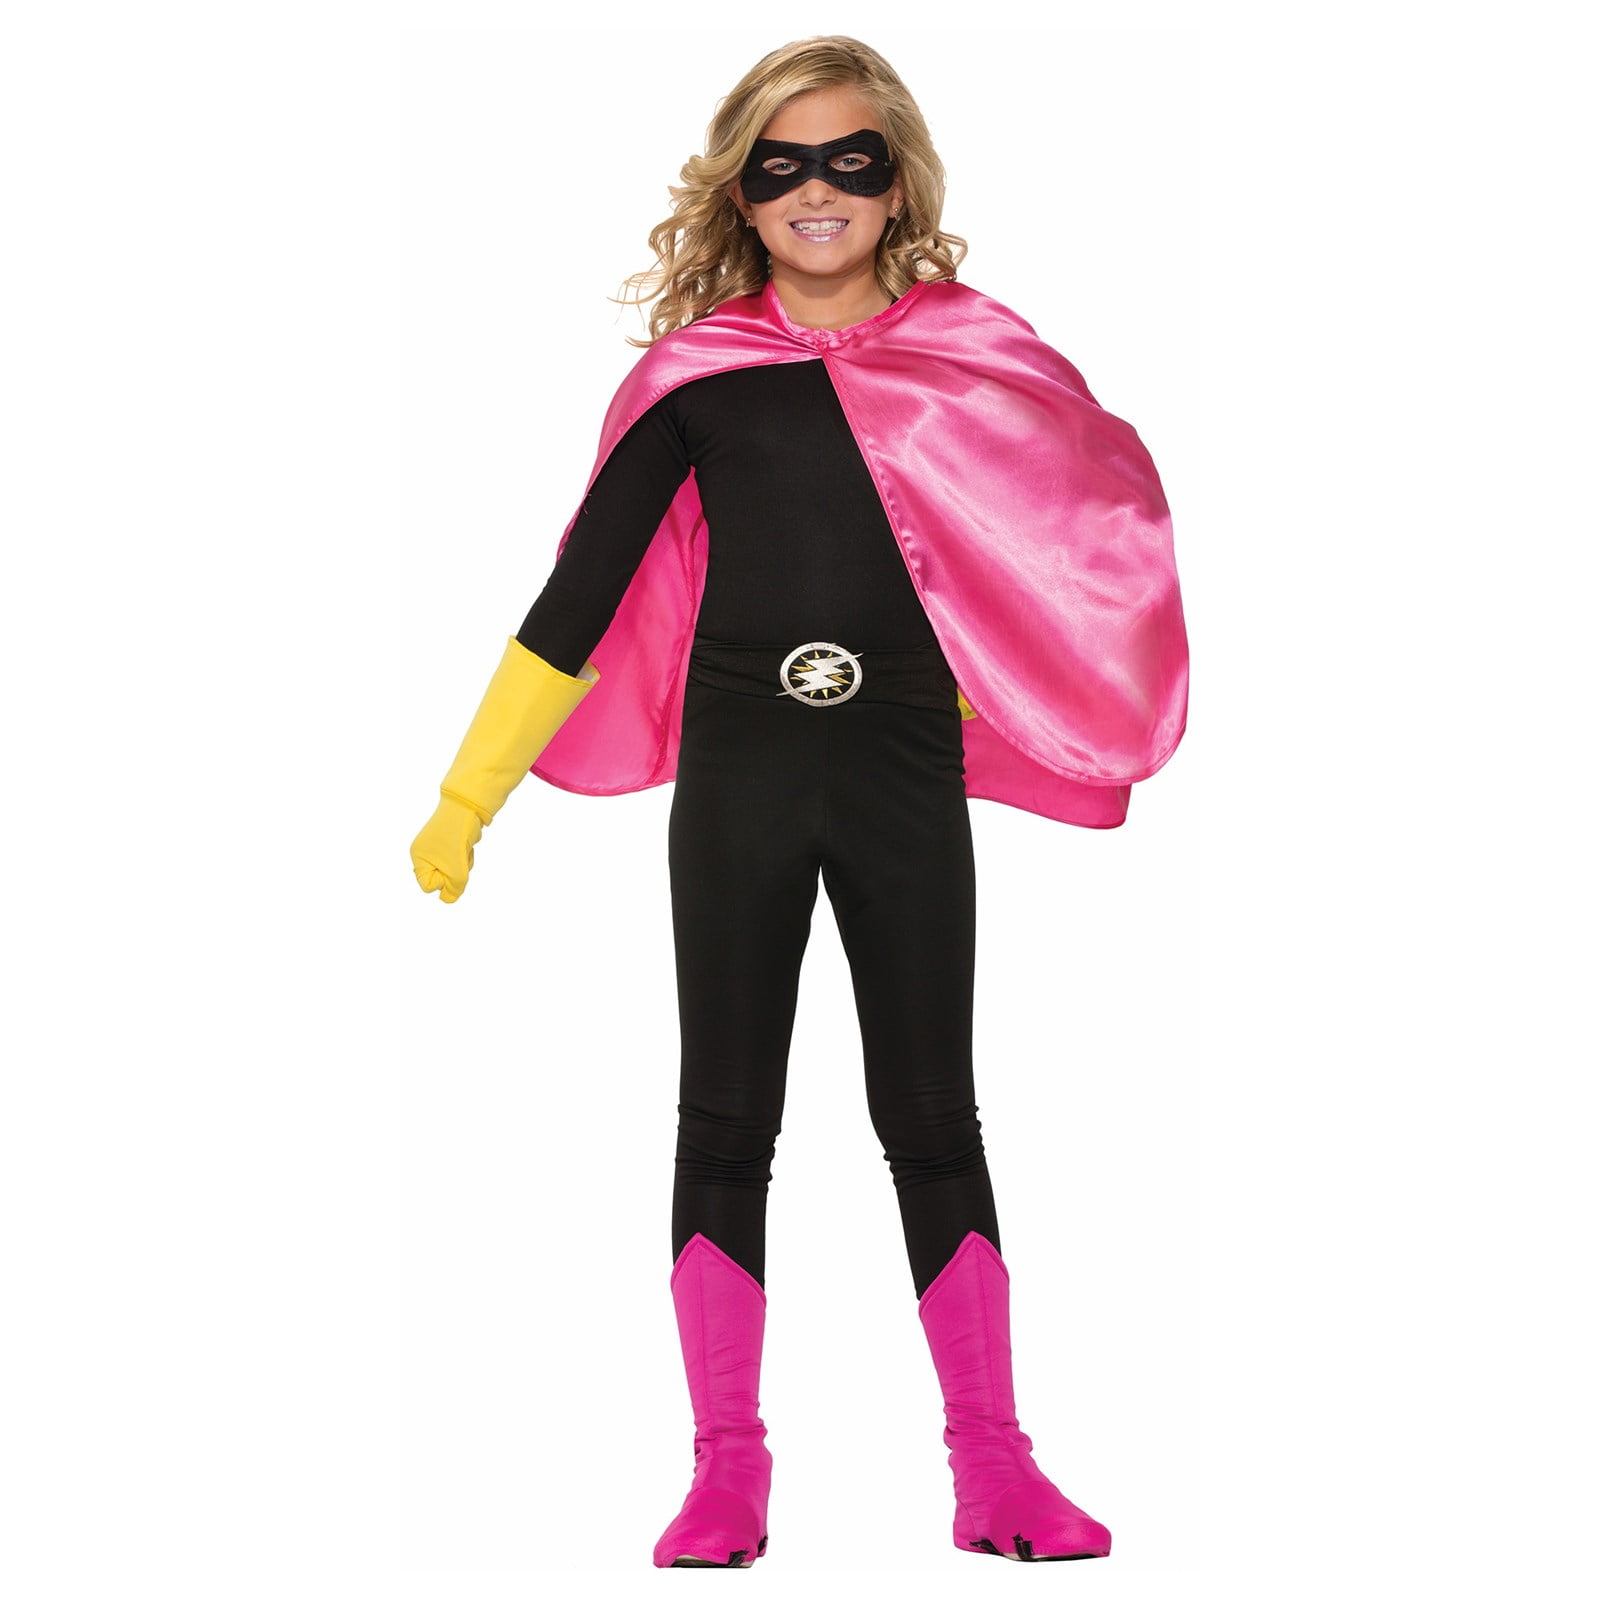 Pink Child Cape Halloween Costume Accessory - Walmart.com